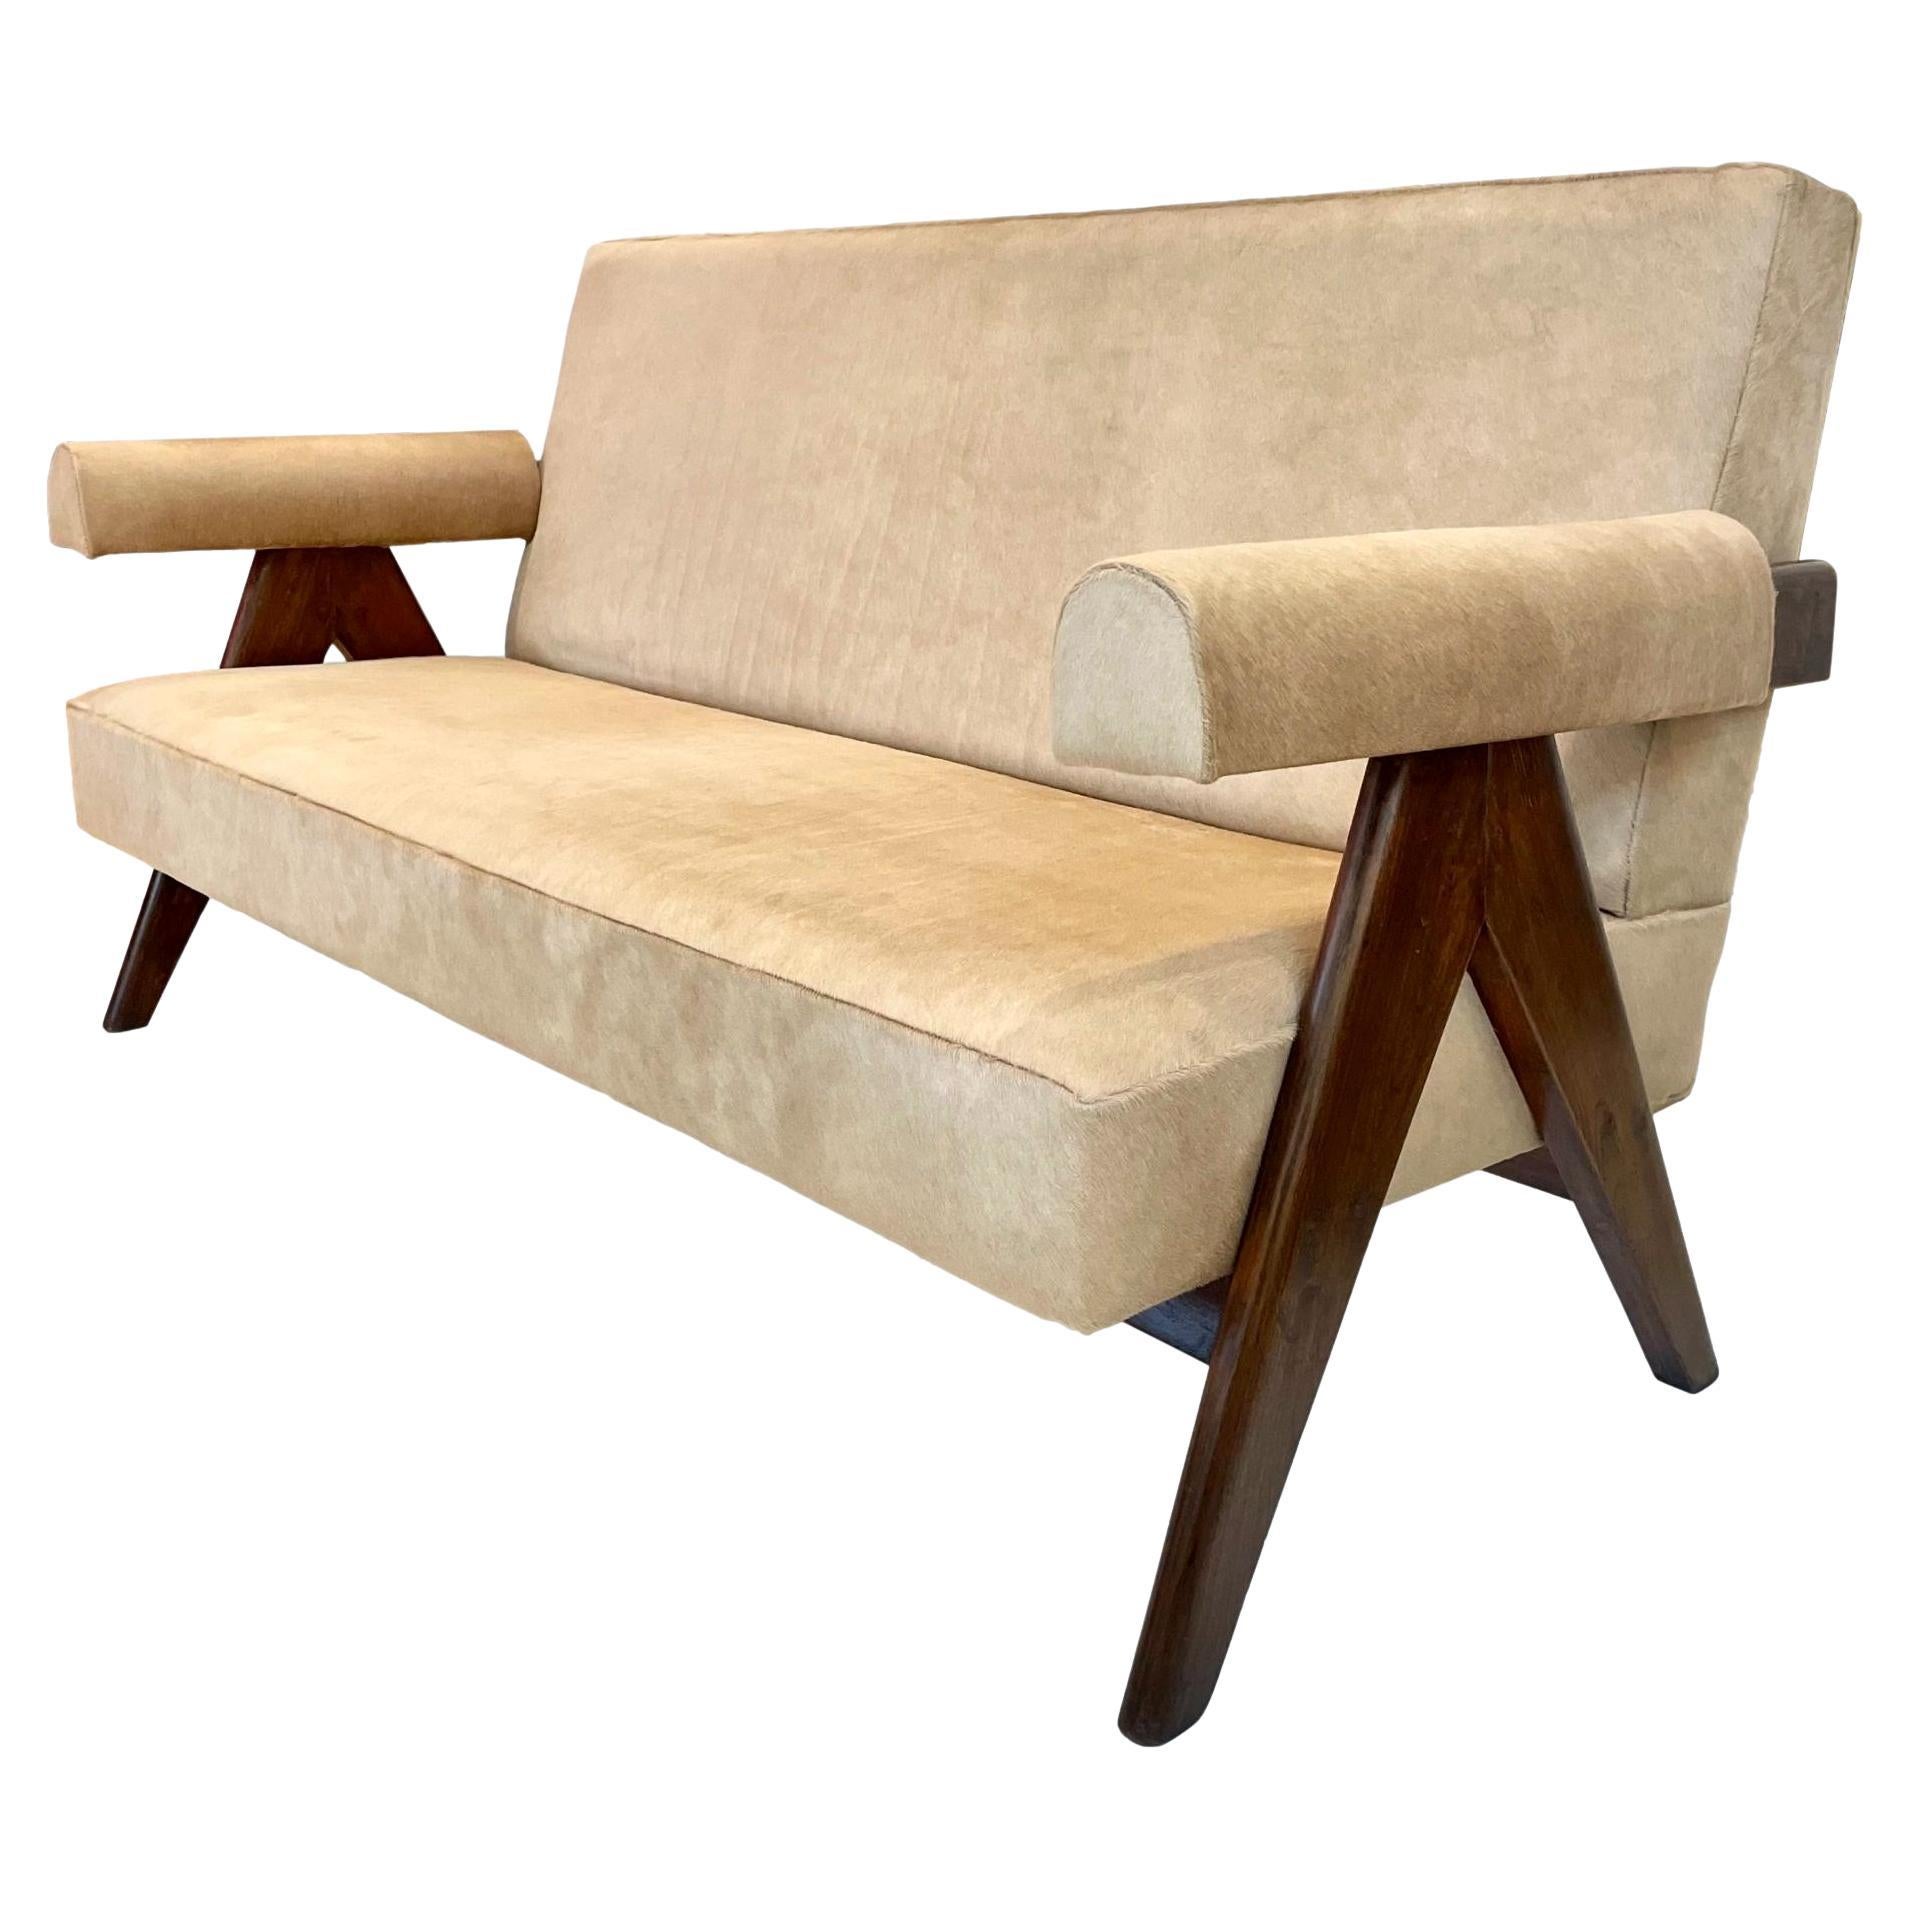 Pierre Jeanneret X-Bein-Sofa aus Rindsleder in Rindsleder, Chandigargh, 1950er Jahre